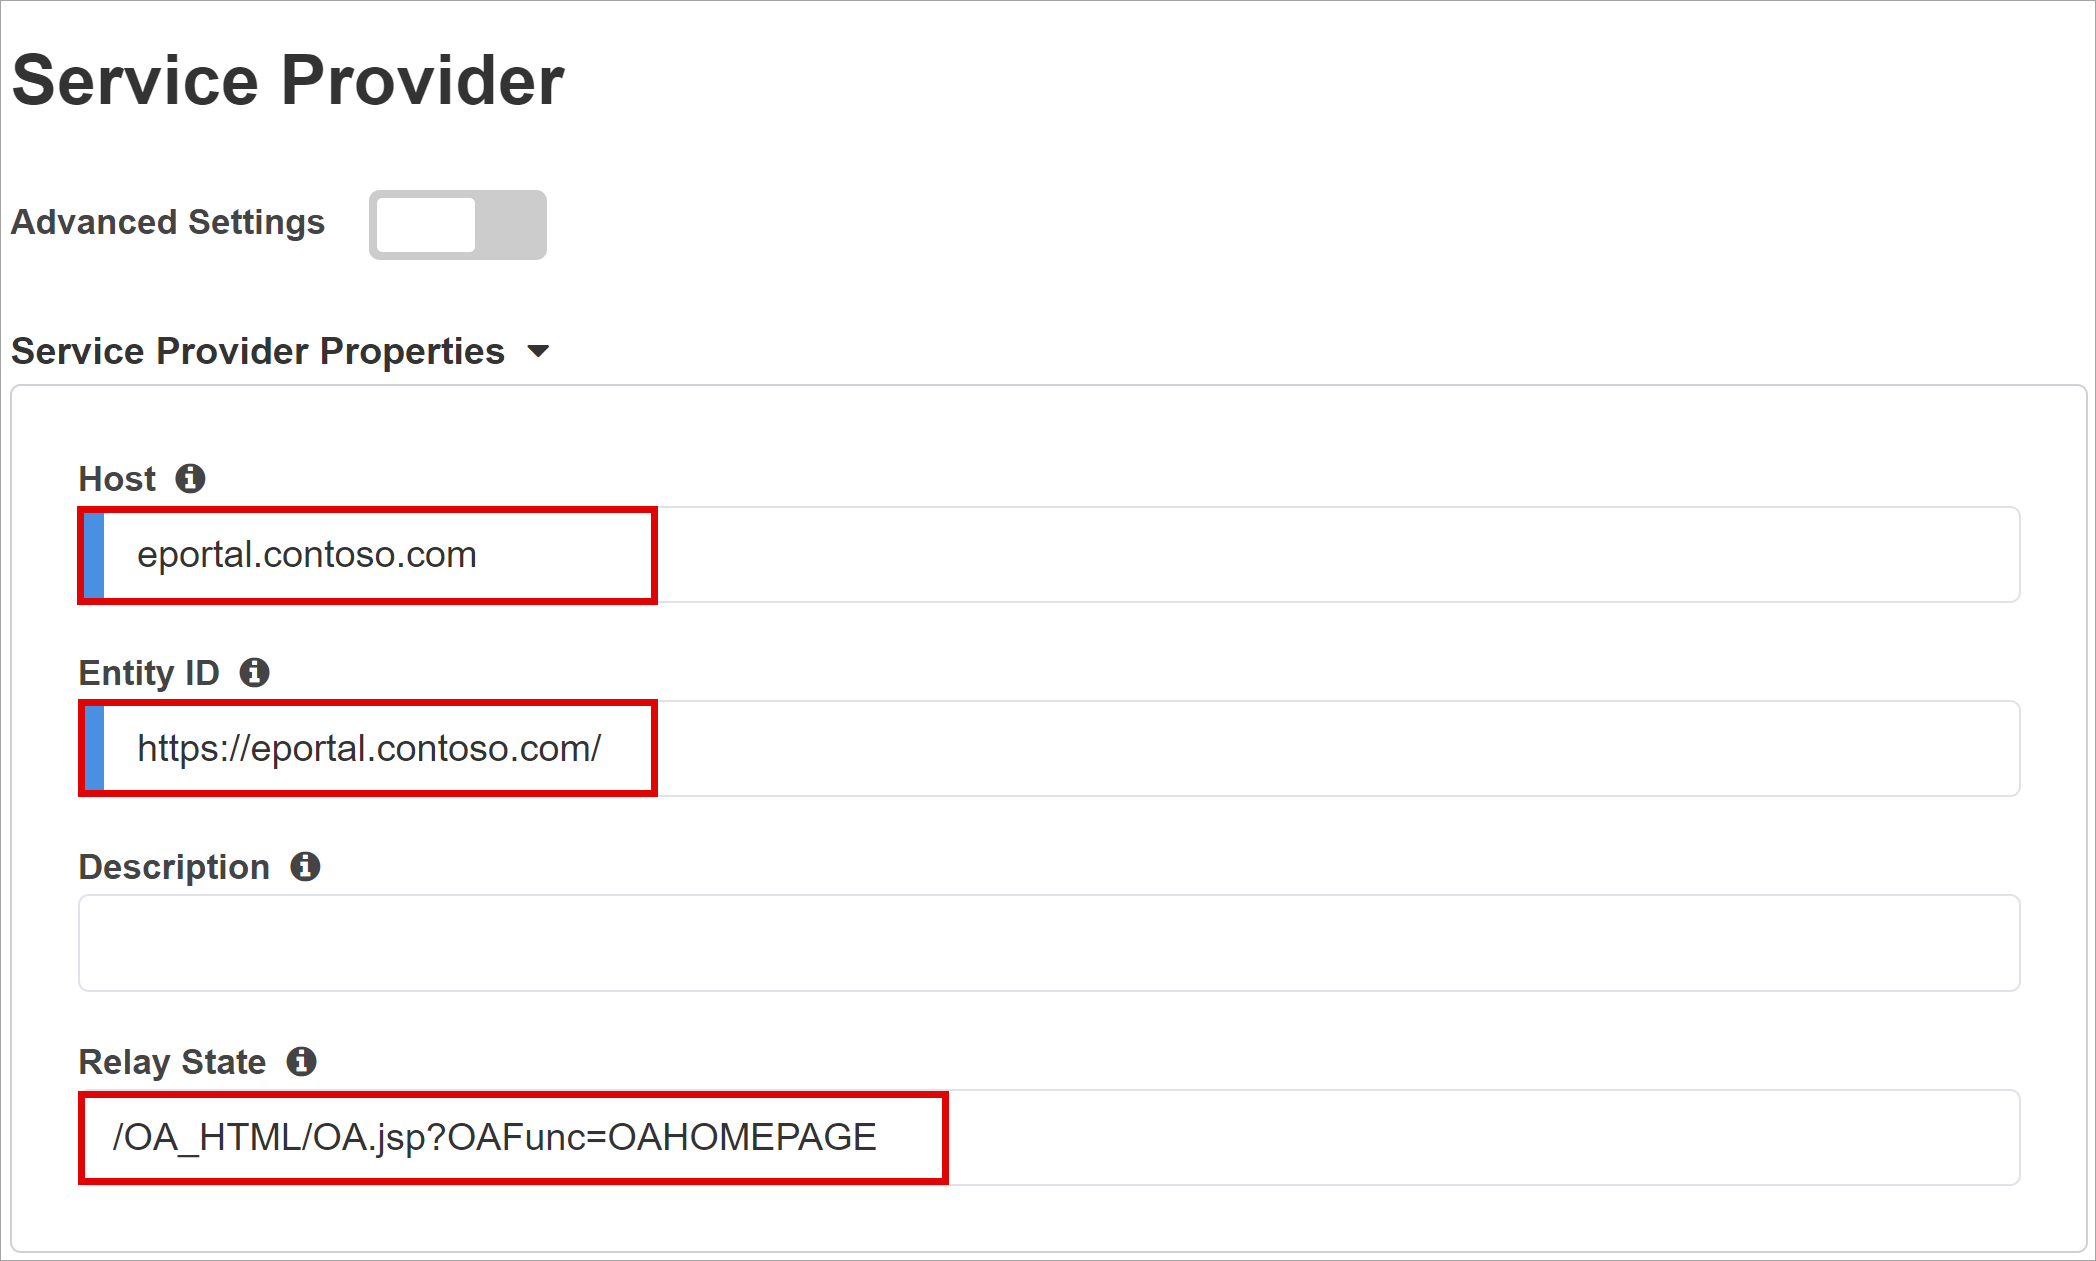 Screenshot for Service Provider settings